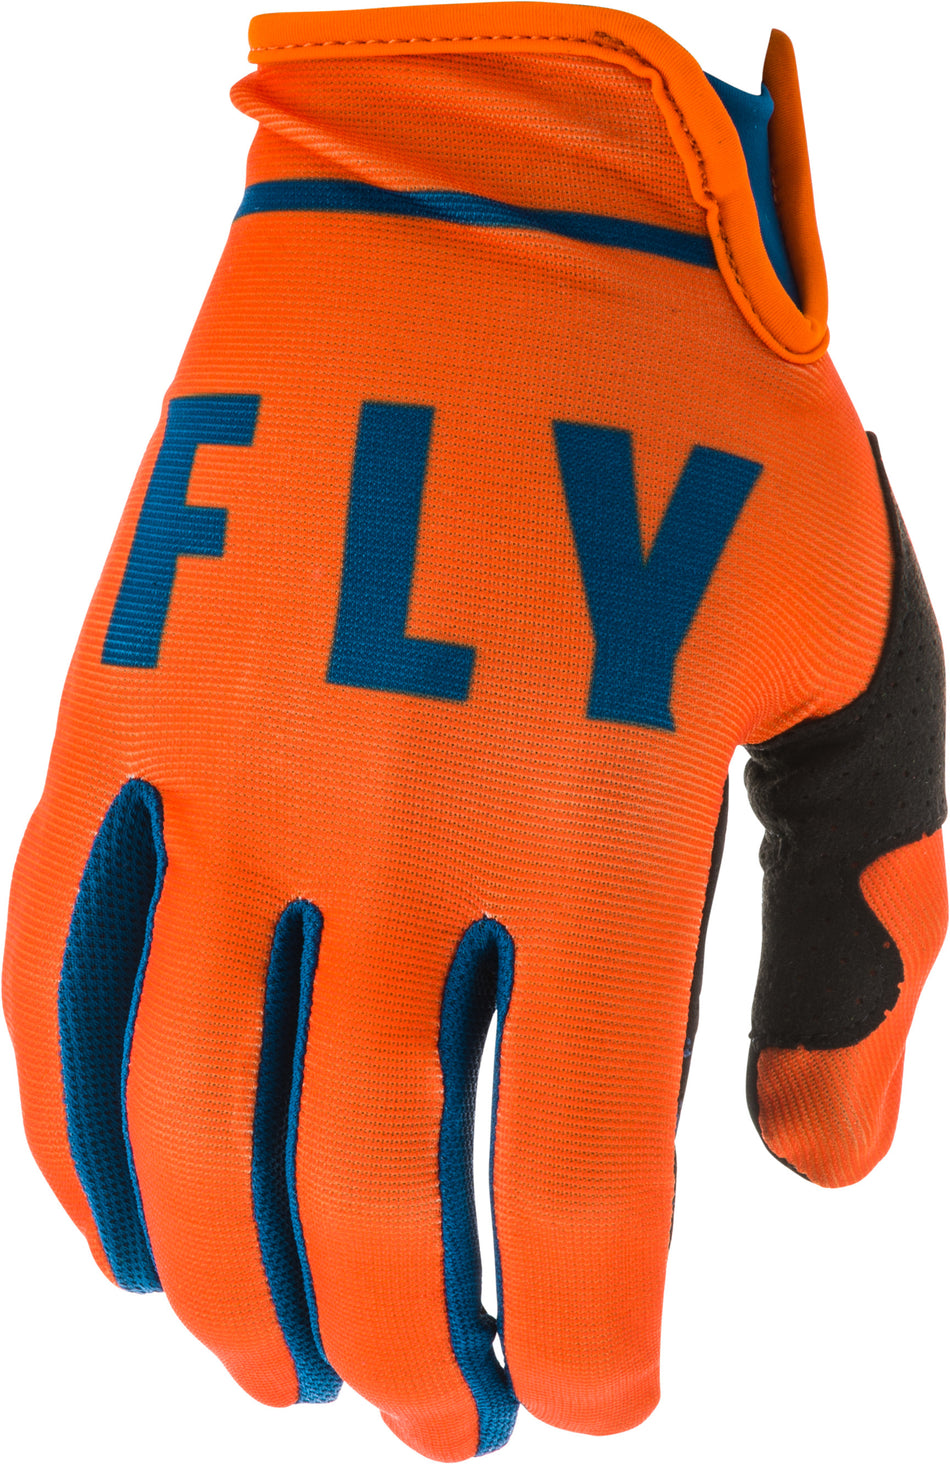 FLY RACING Lite Gloves Orange/Navy Sz 13 373-71313